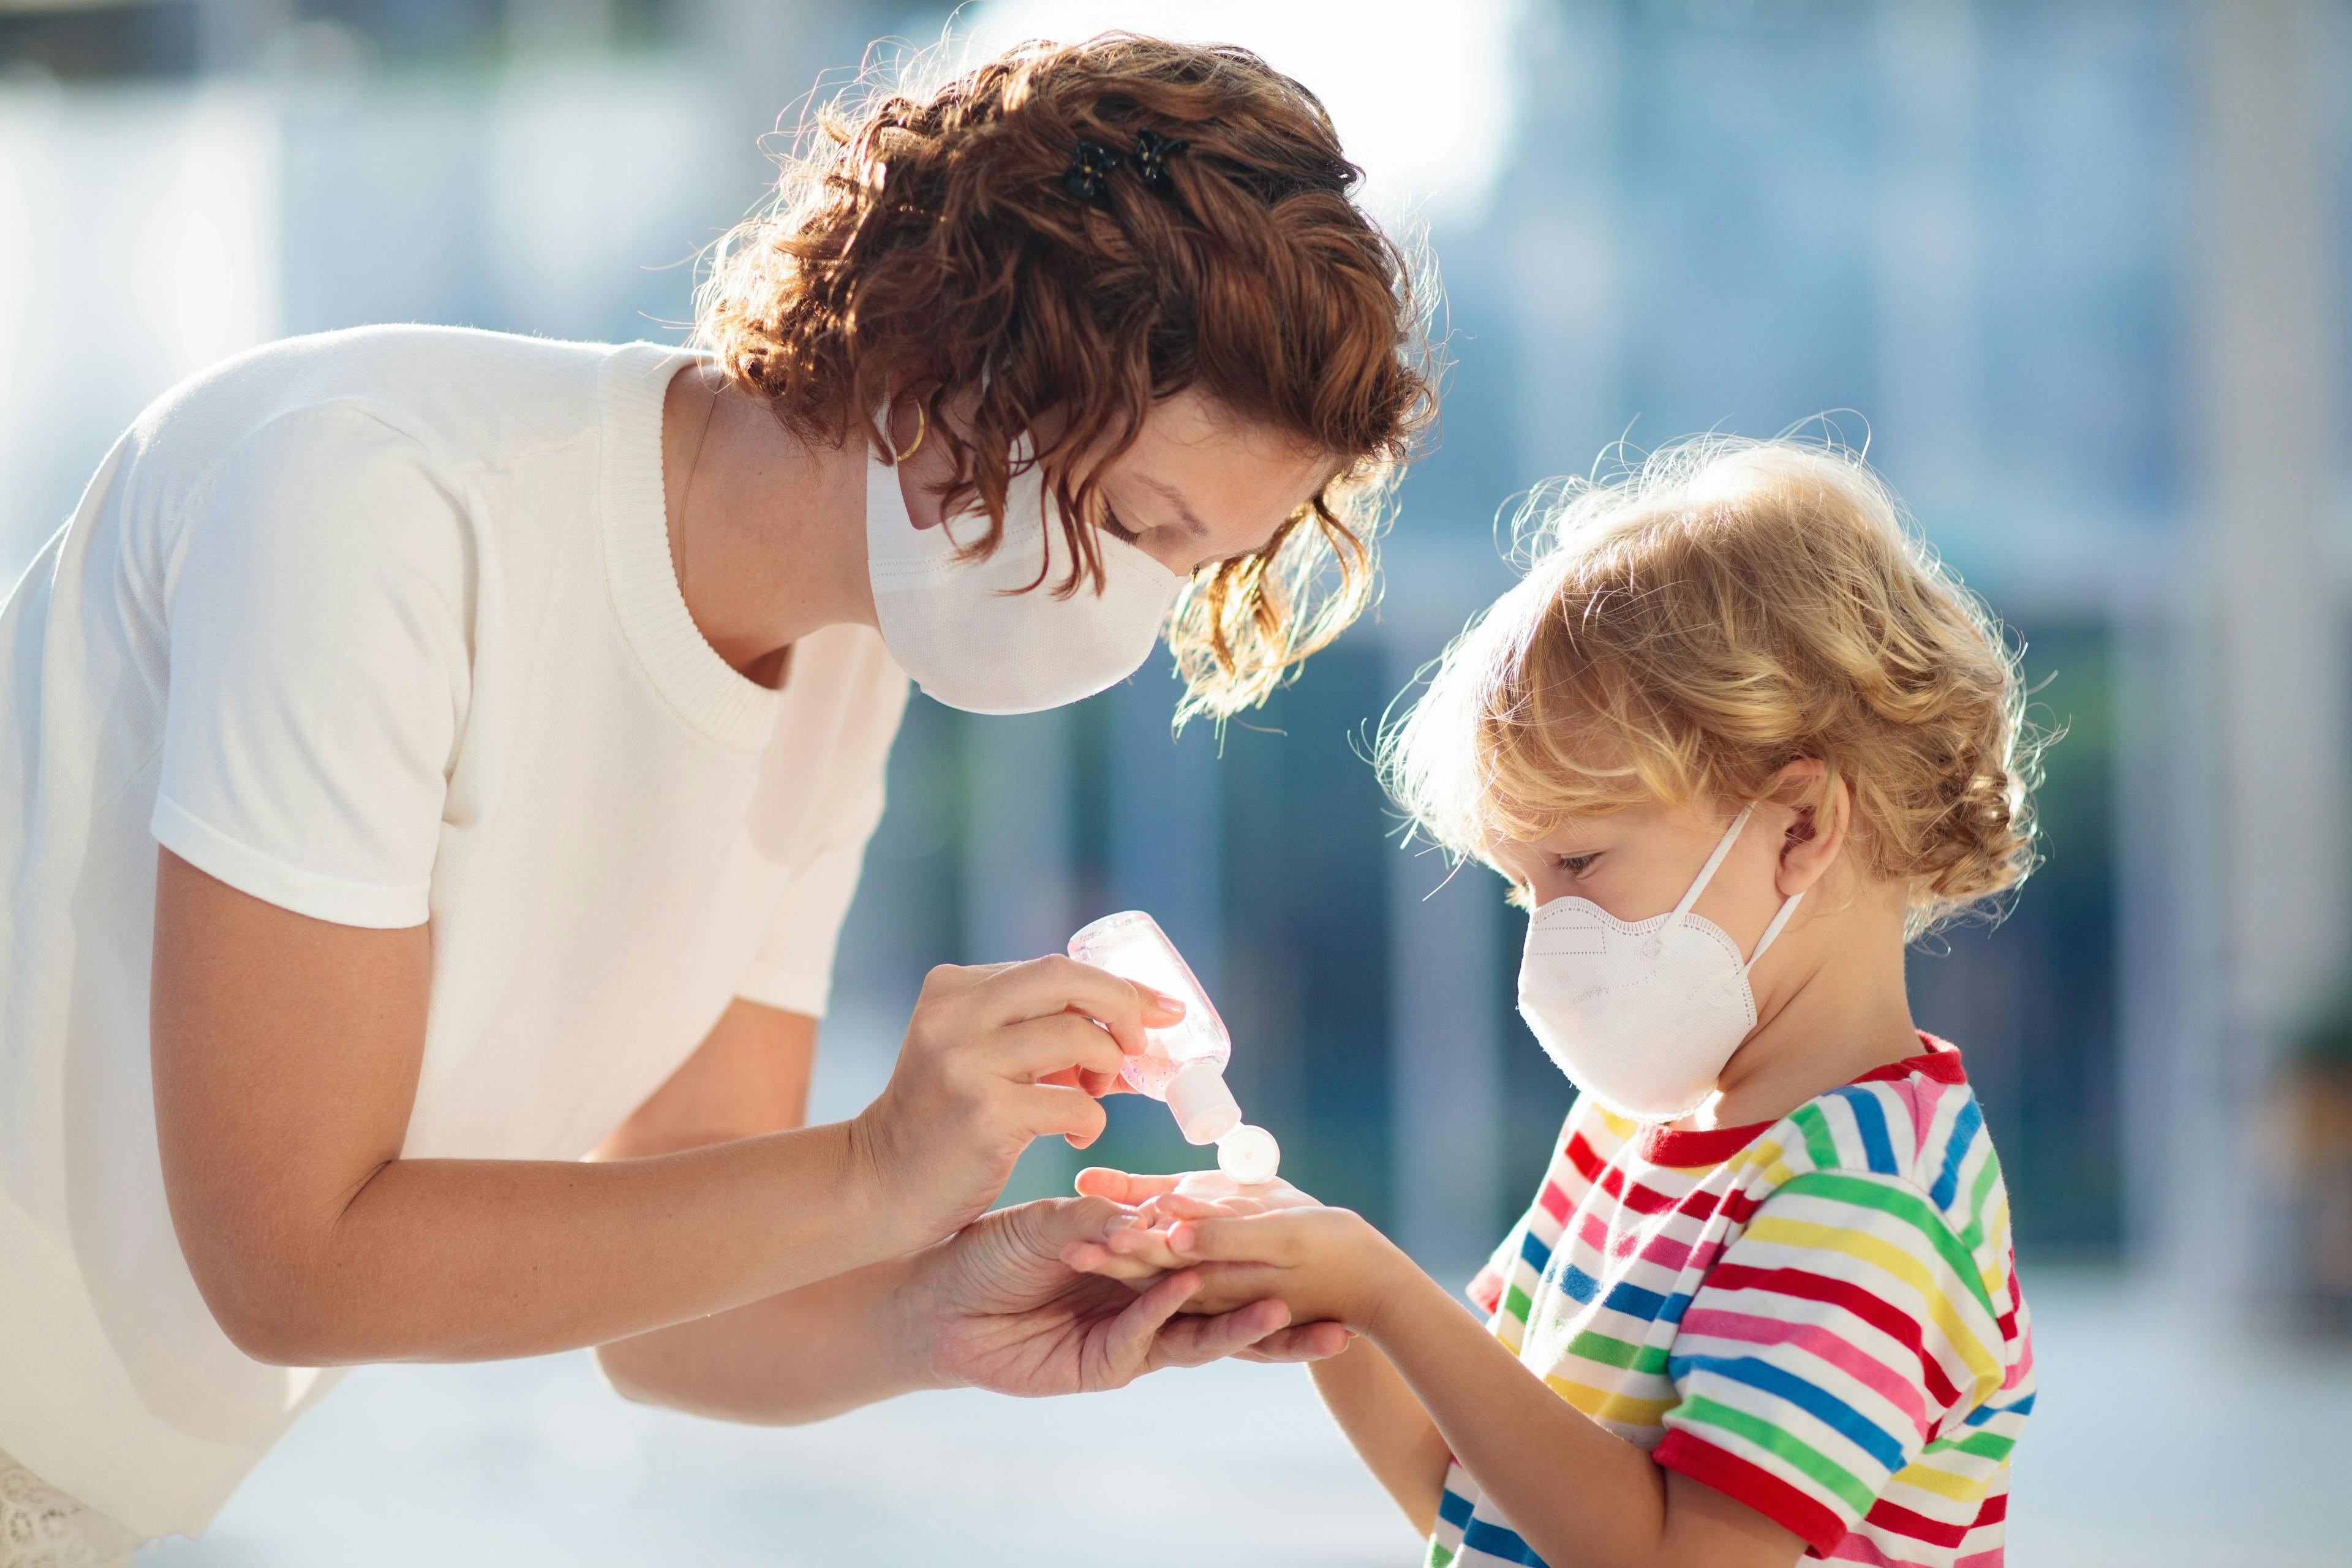 Hand sanitizer causes ocular chemical burns in pediatric population 